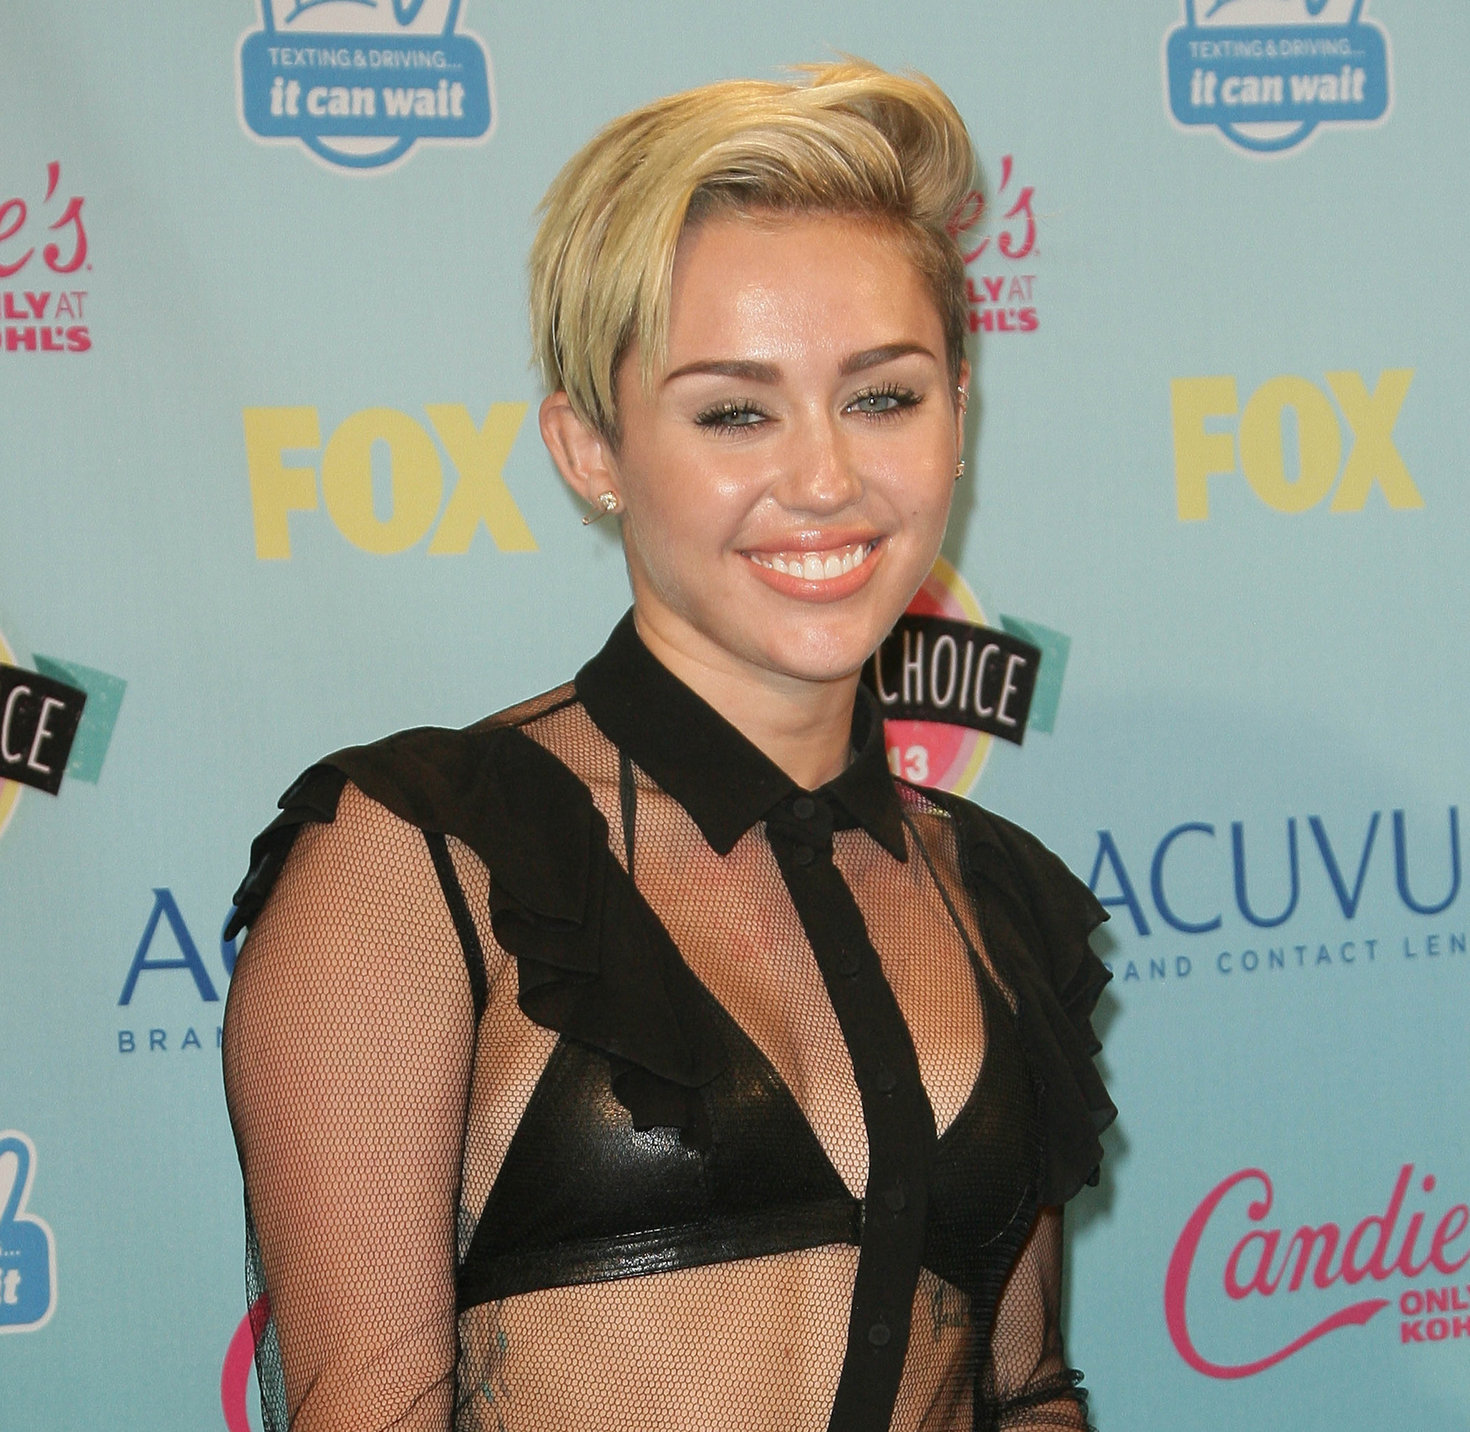 Miley cyrus cleavage teen choice awards